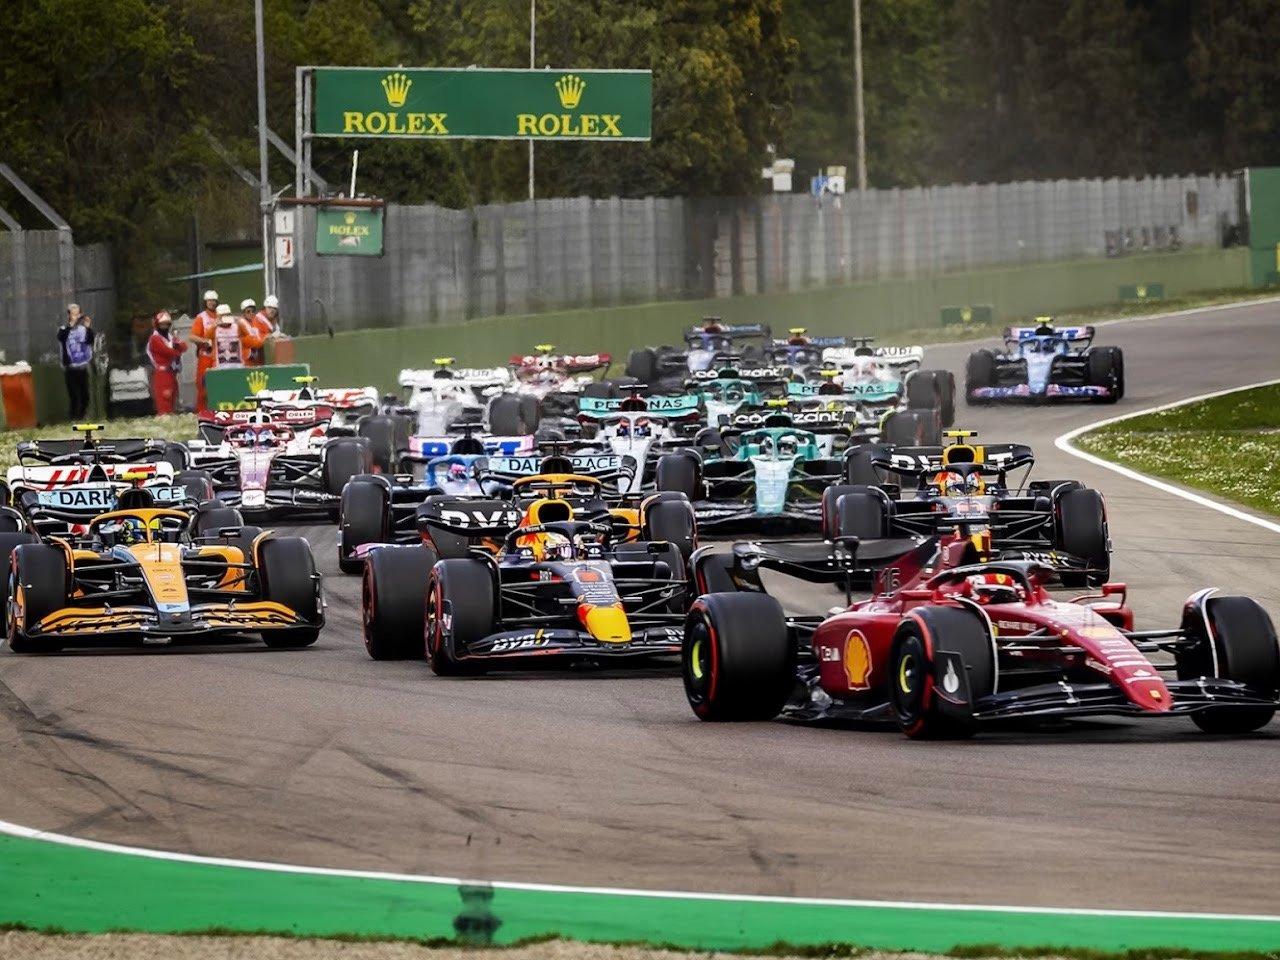 coches de fórmula 1 en un circuito de carreras